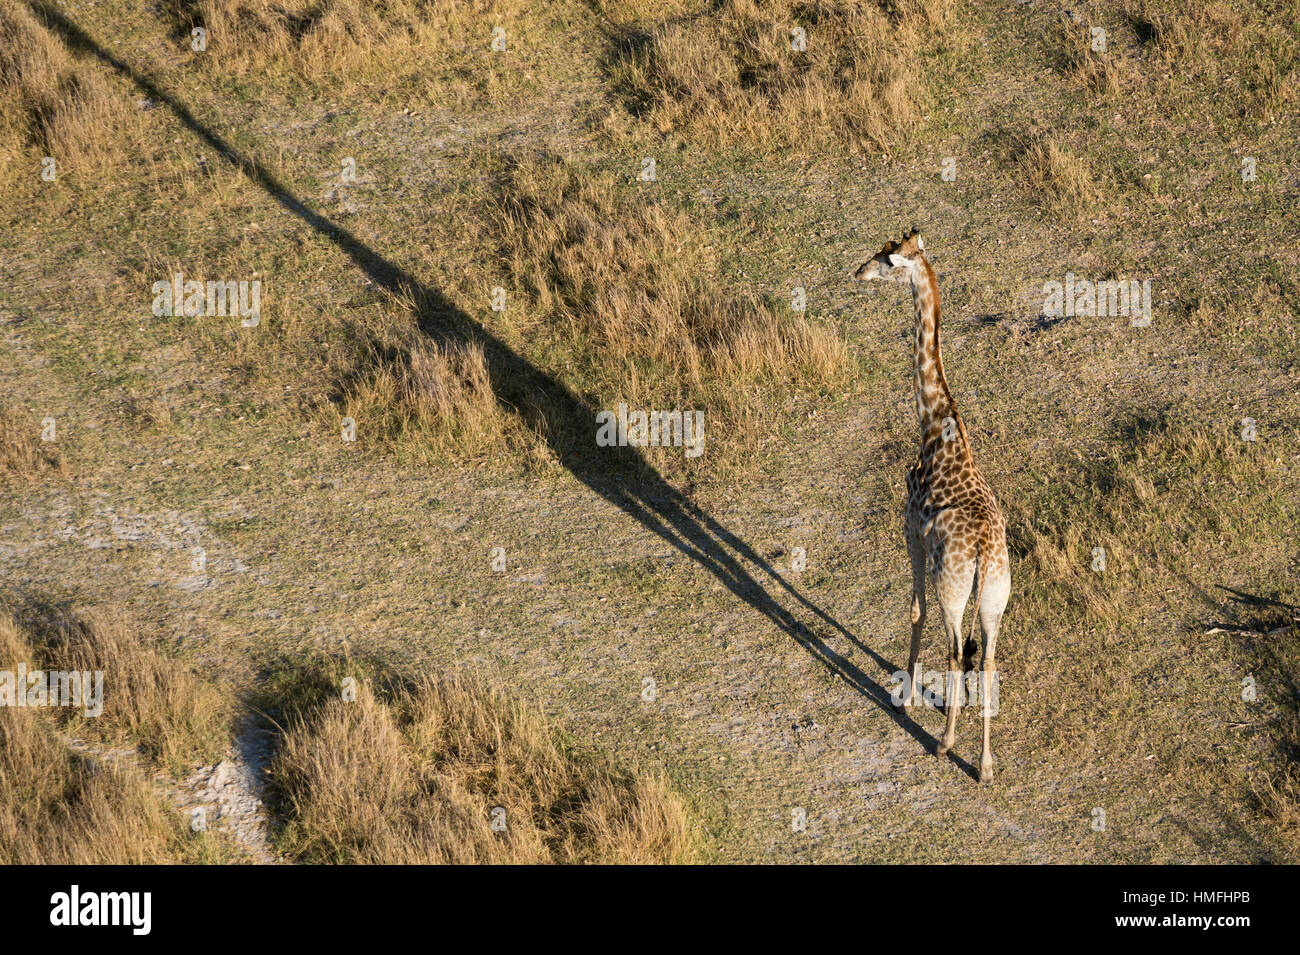 An aerial view of a giraffe (Giraffe camelopardalis) walking in the Okavango Delta, Botswana Stock Photo